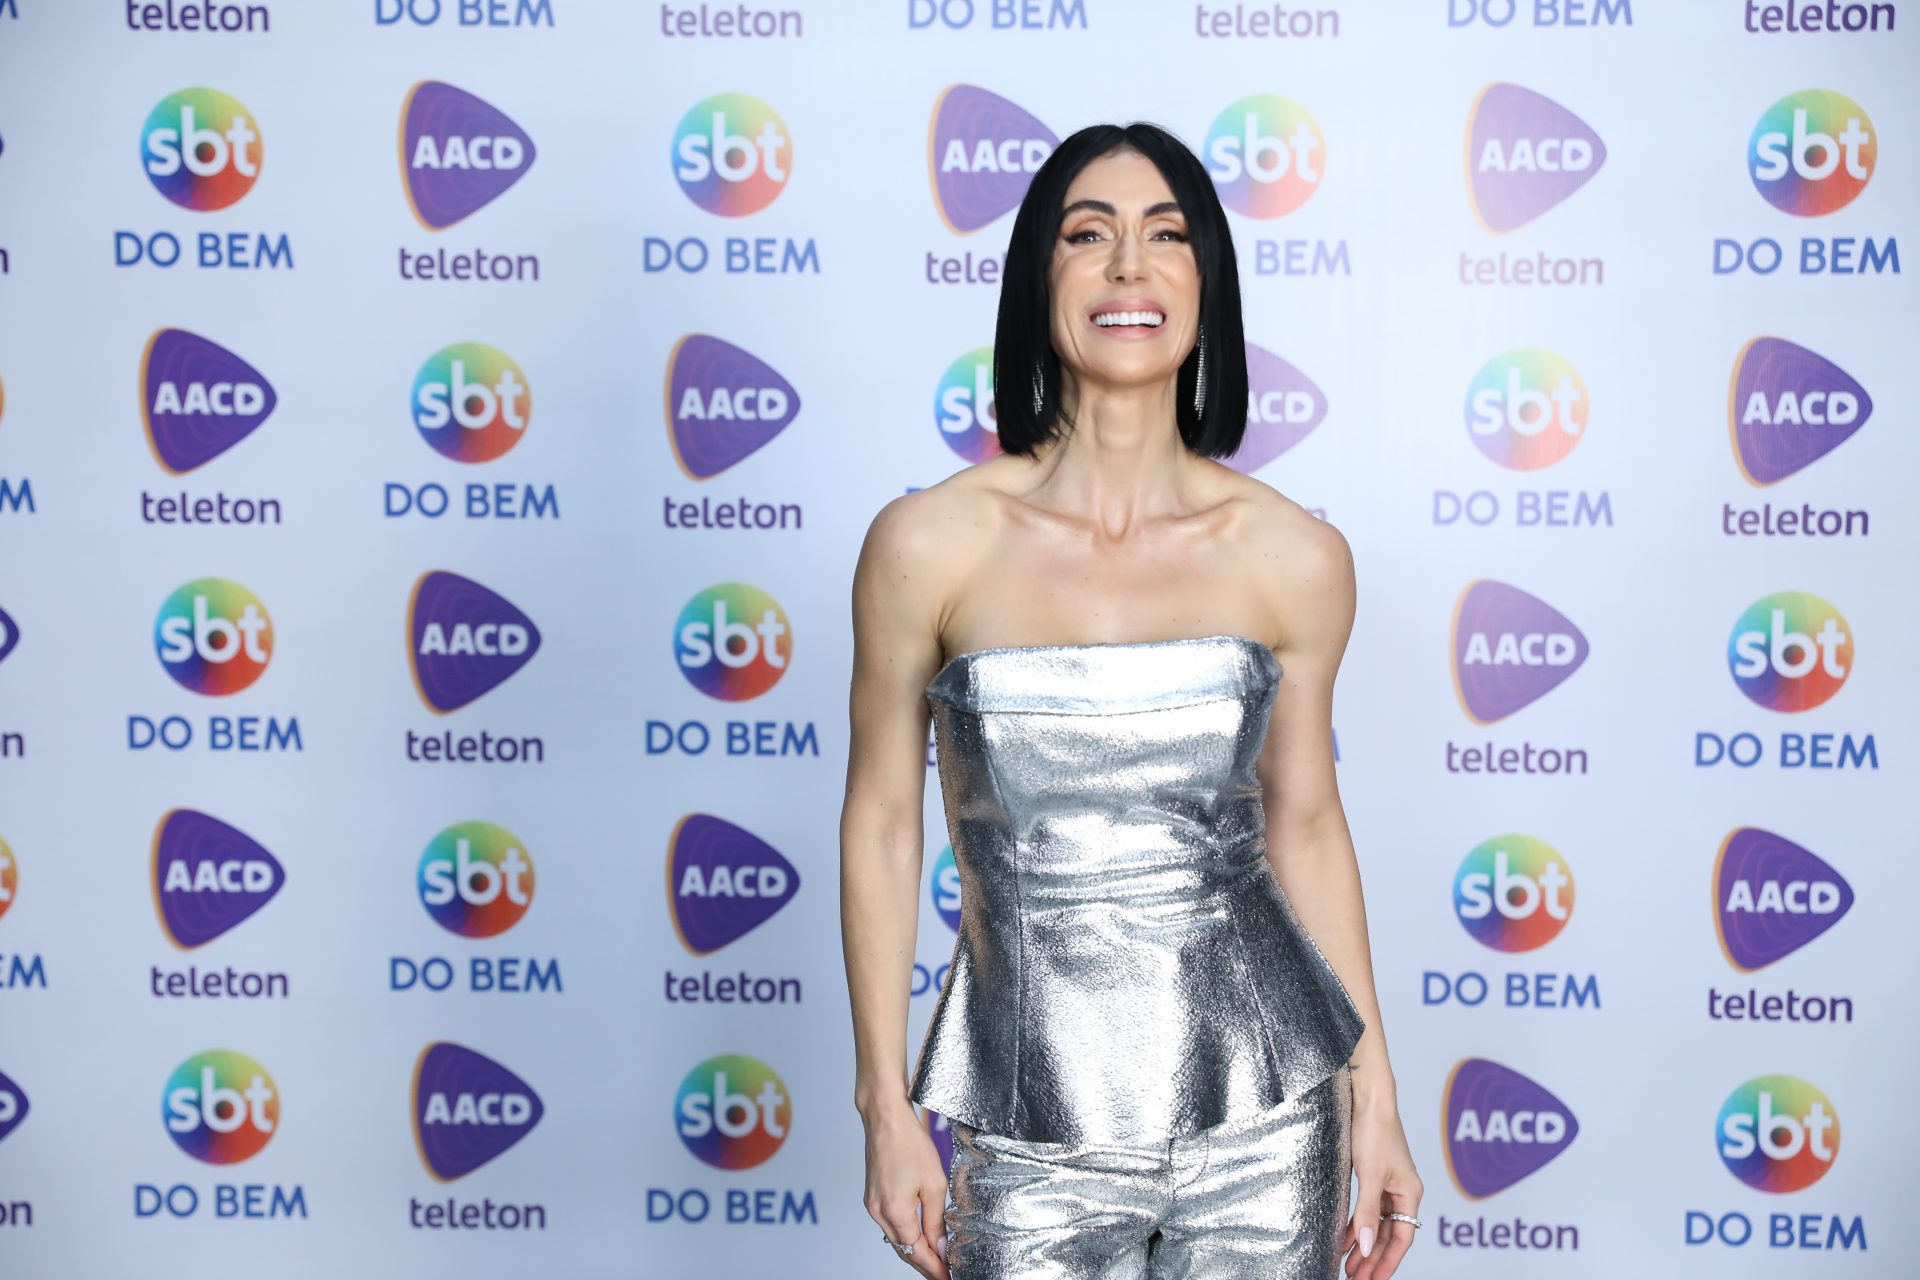 Fora da Globo, Michelle Barros incorpora espírito do SBT e dubla Cher no Teleton